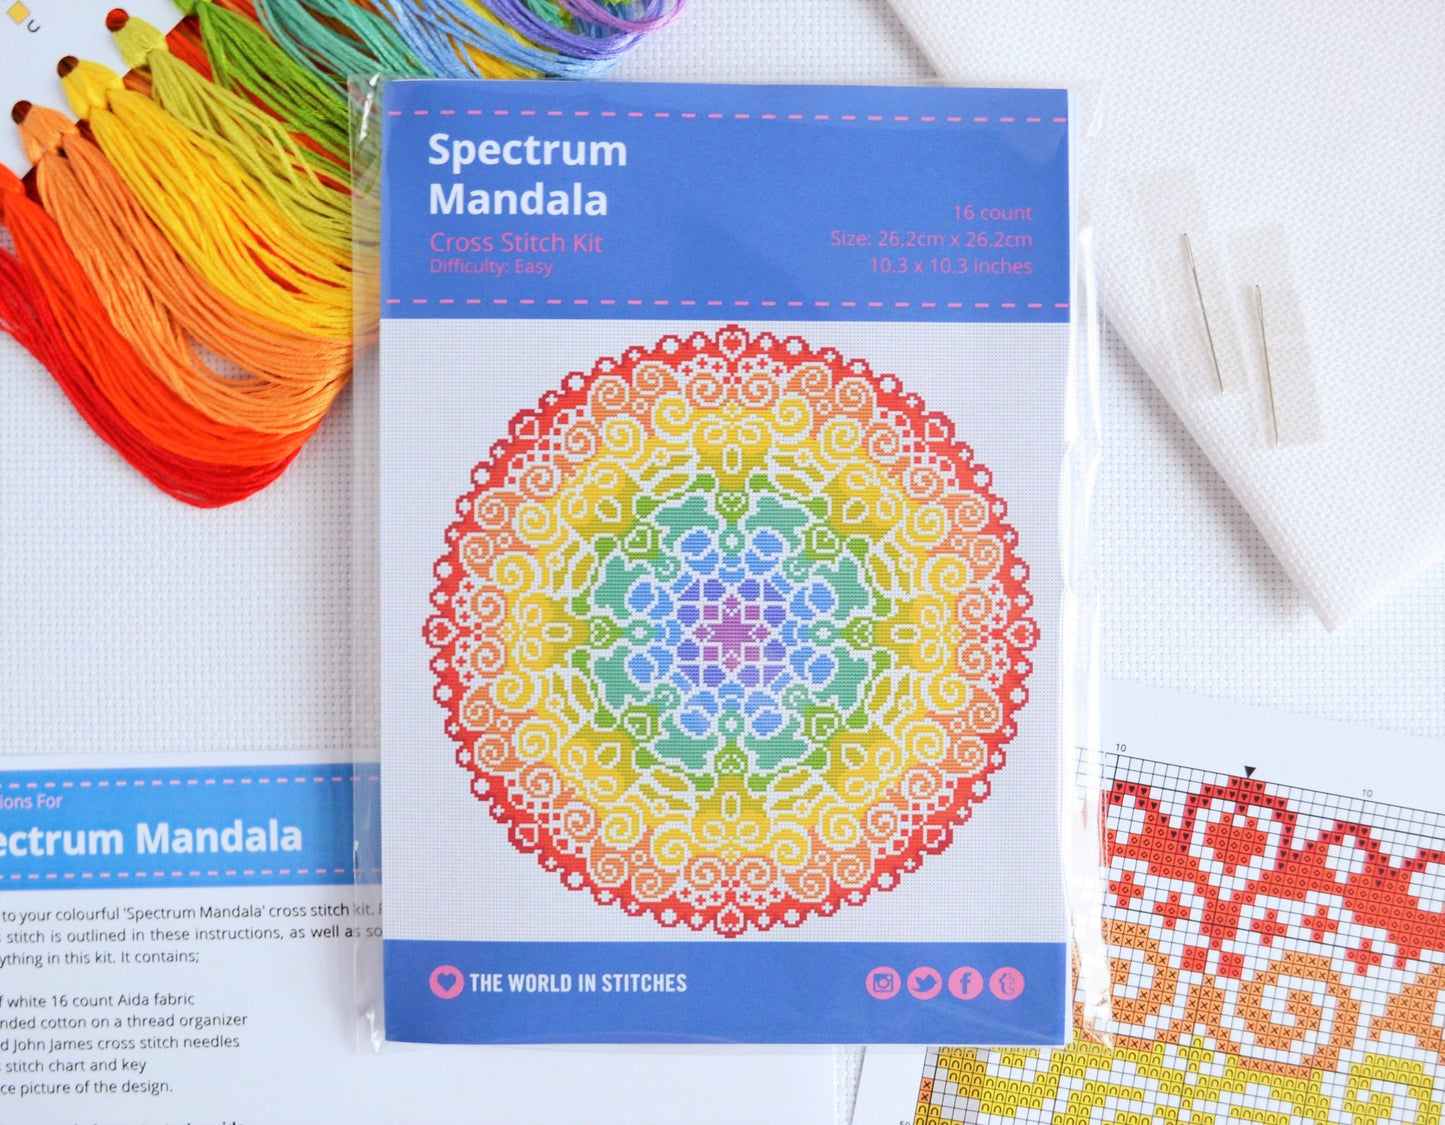 Bundle Offer: Spectrum and Spectral Mandala Cross Stitch Kits